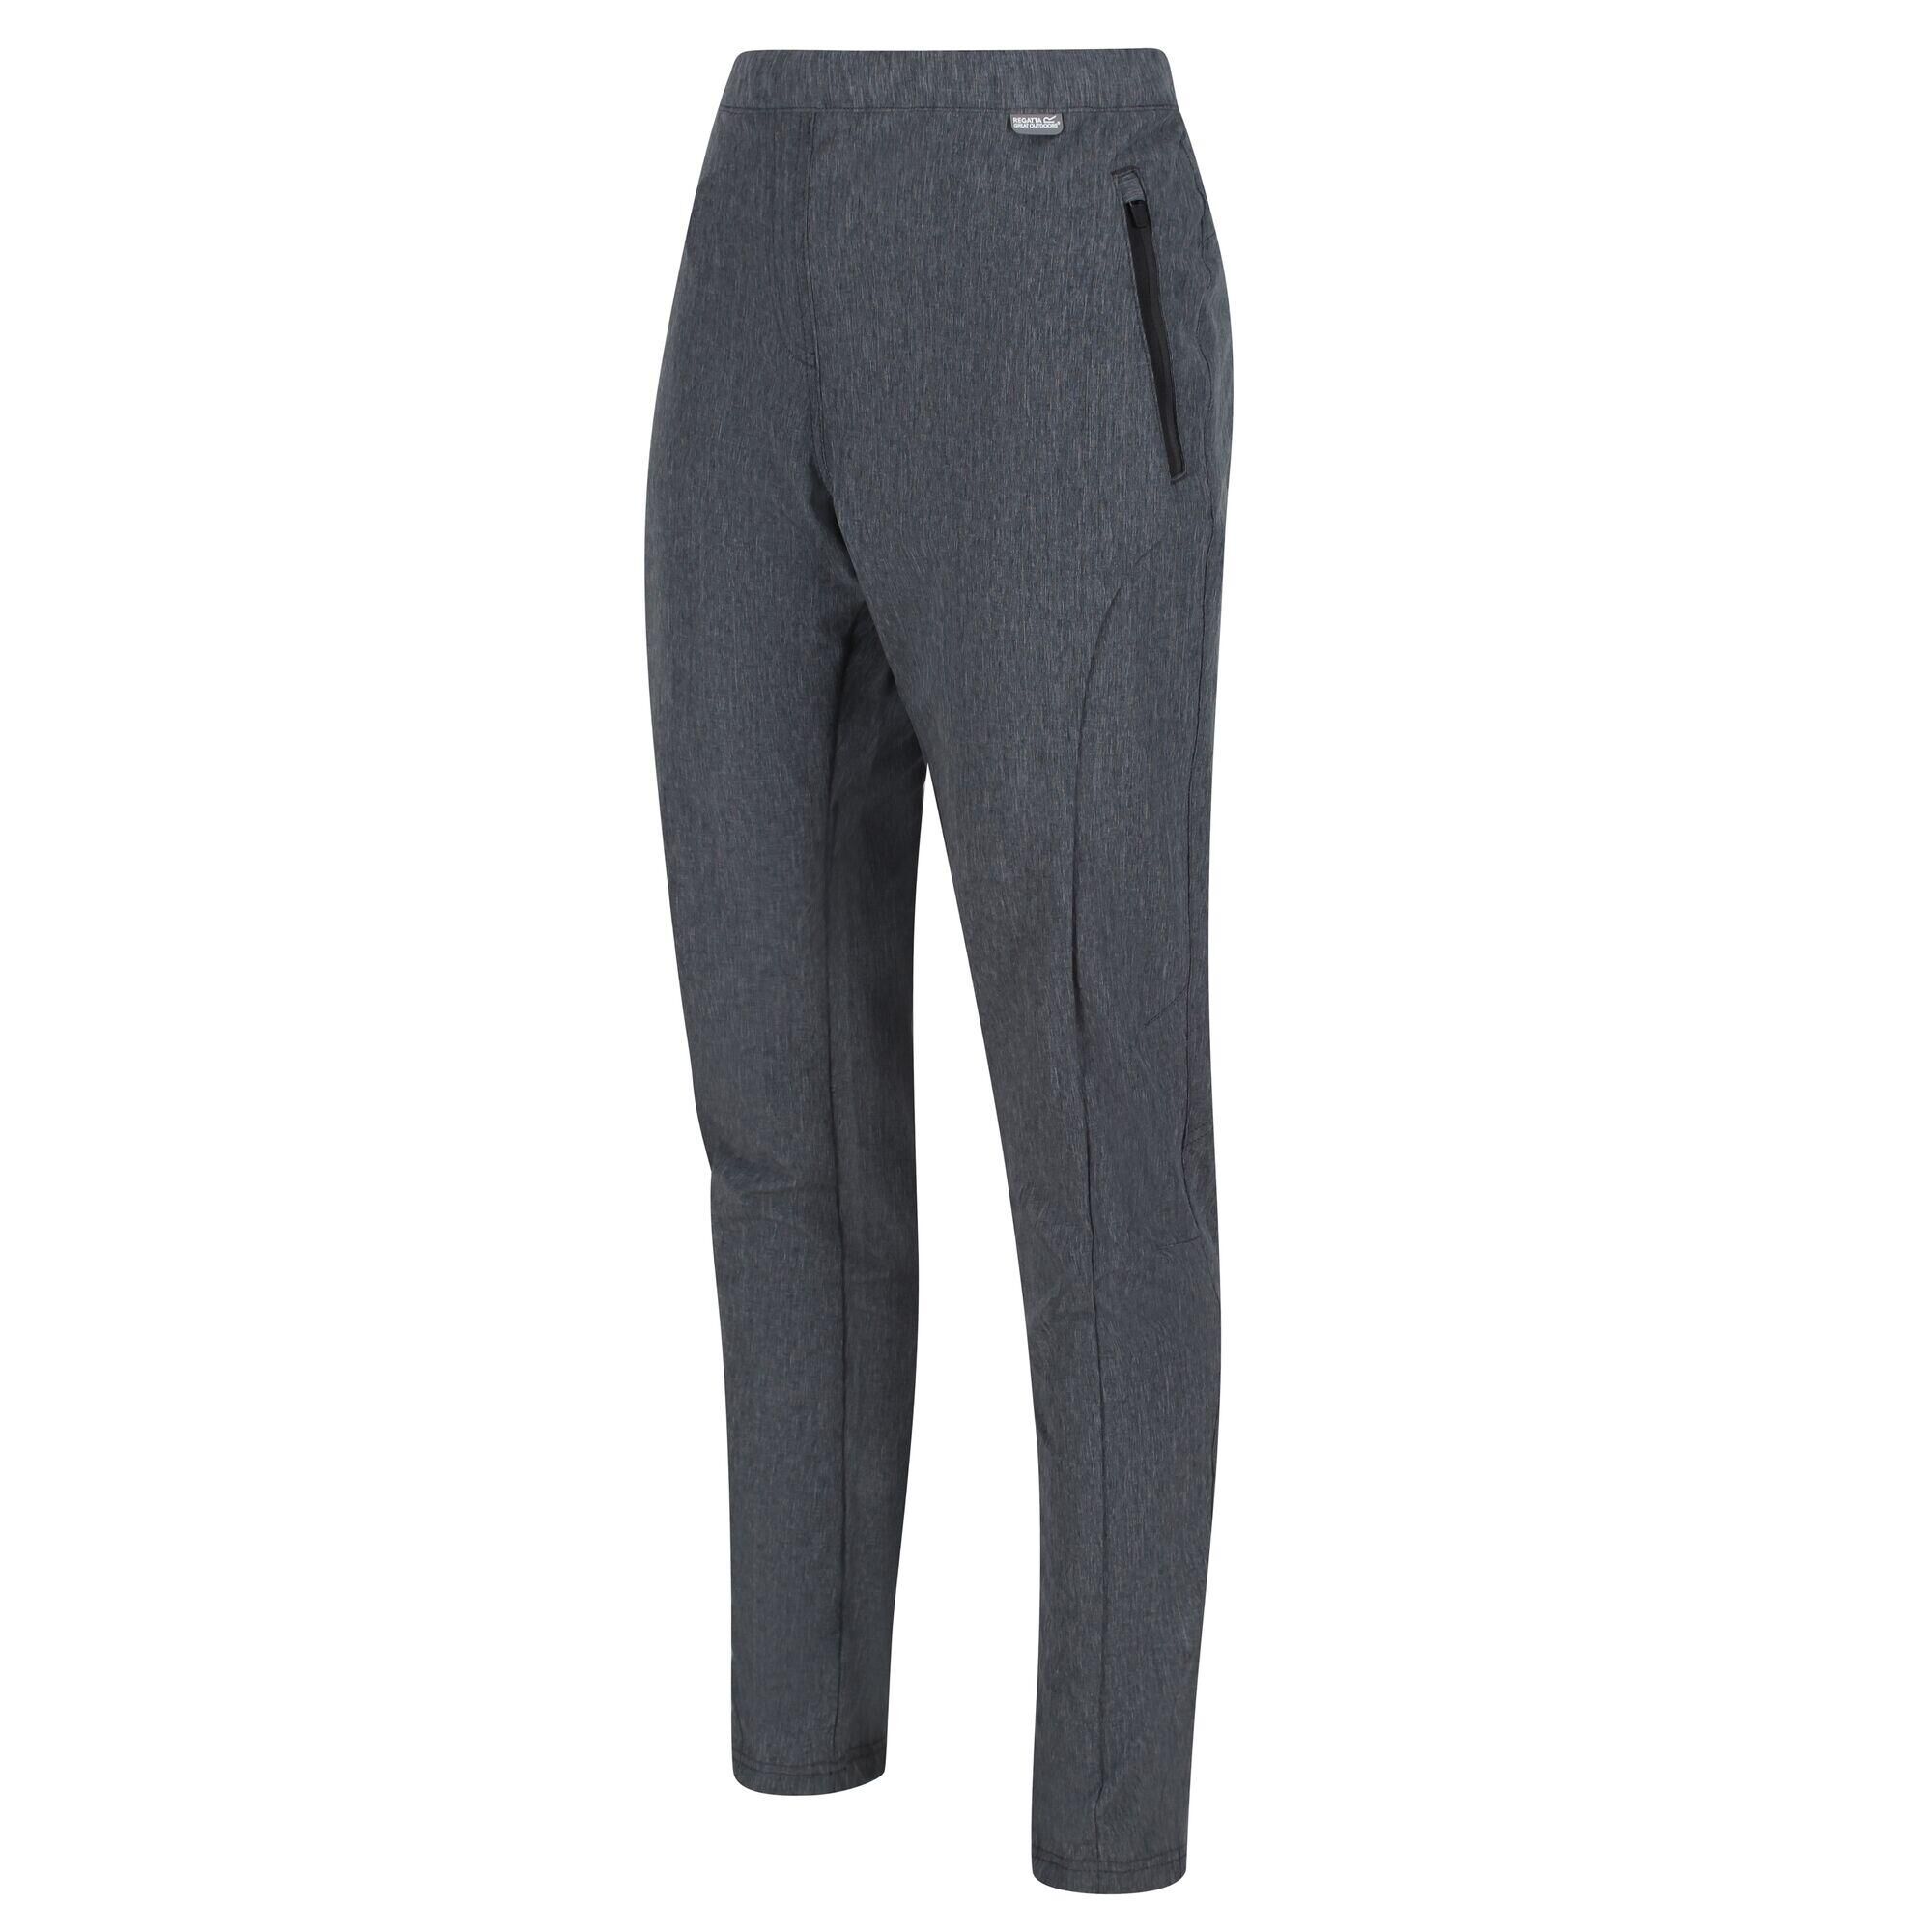 REGATTA Pentre Stretch Women's Hiking Trousers - Mid Grey